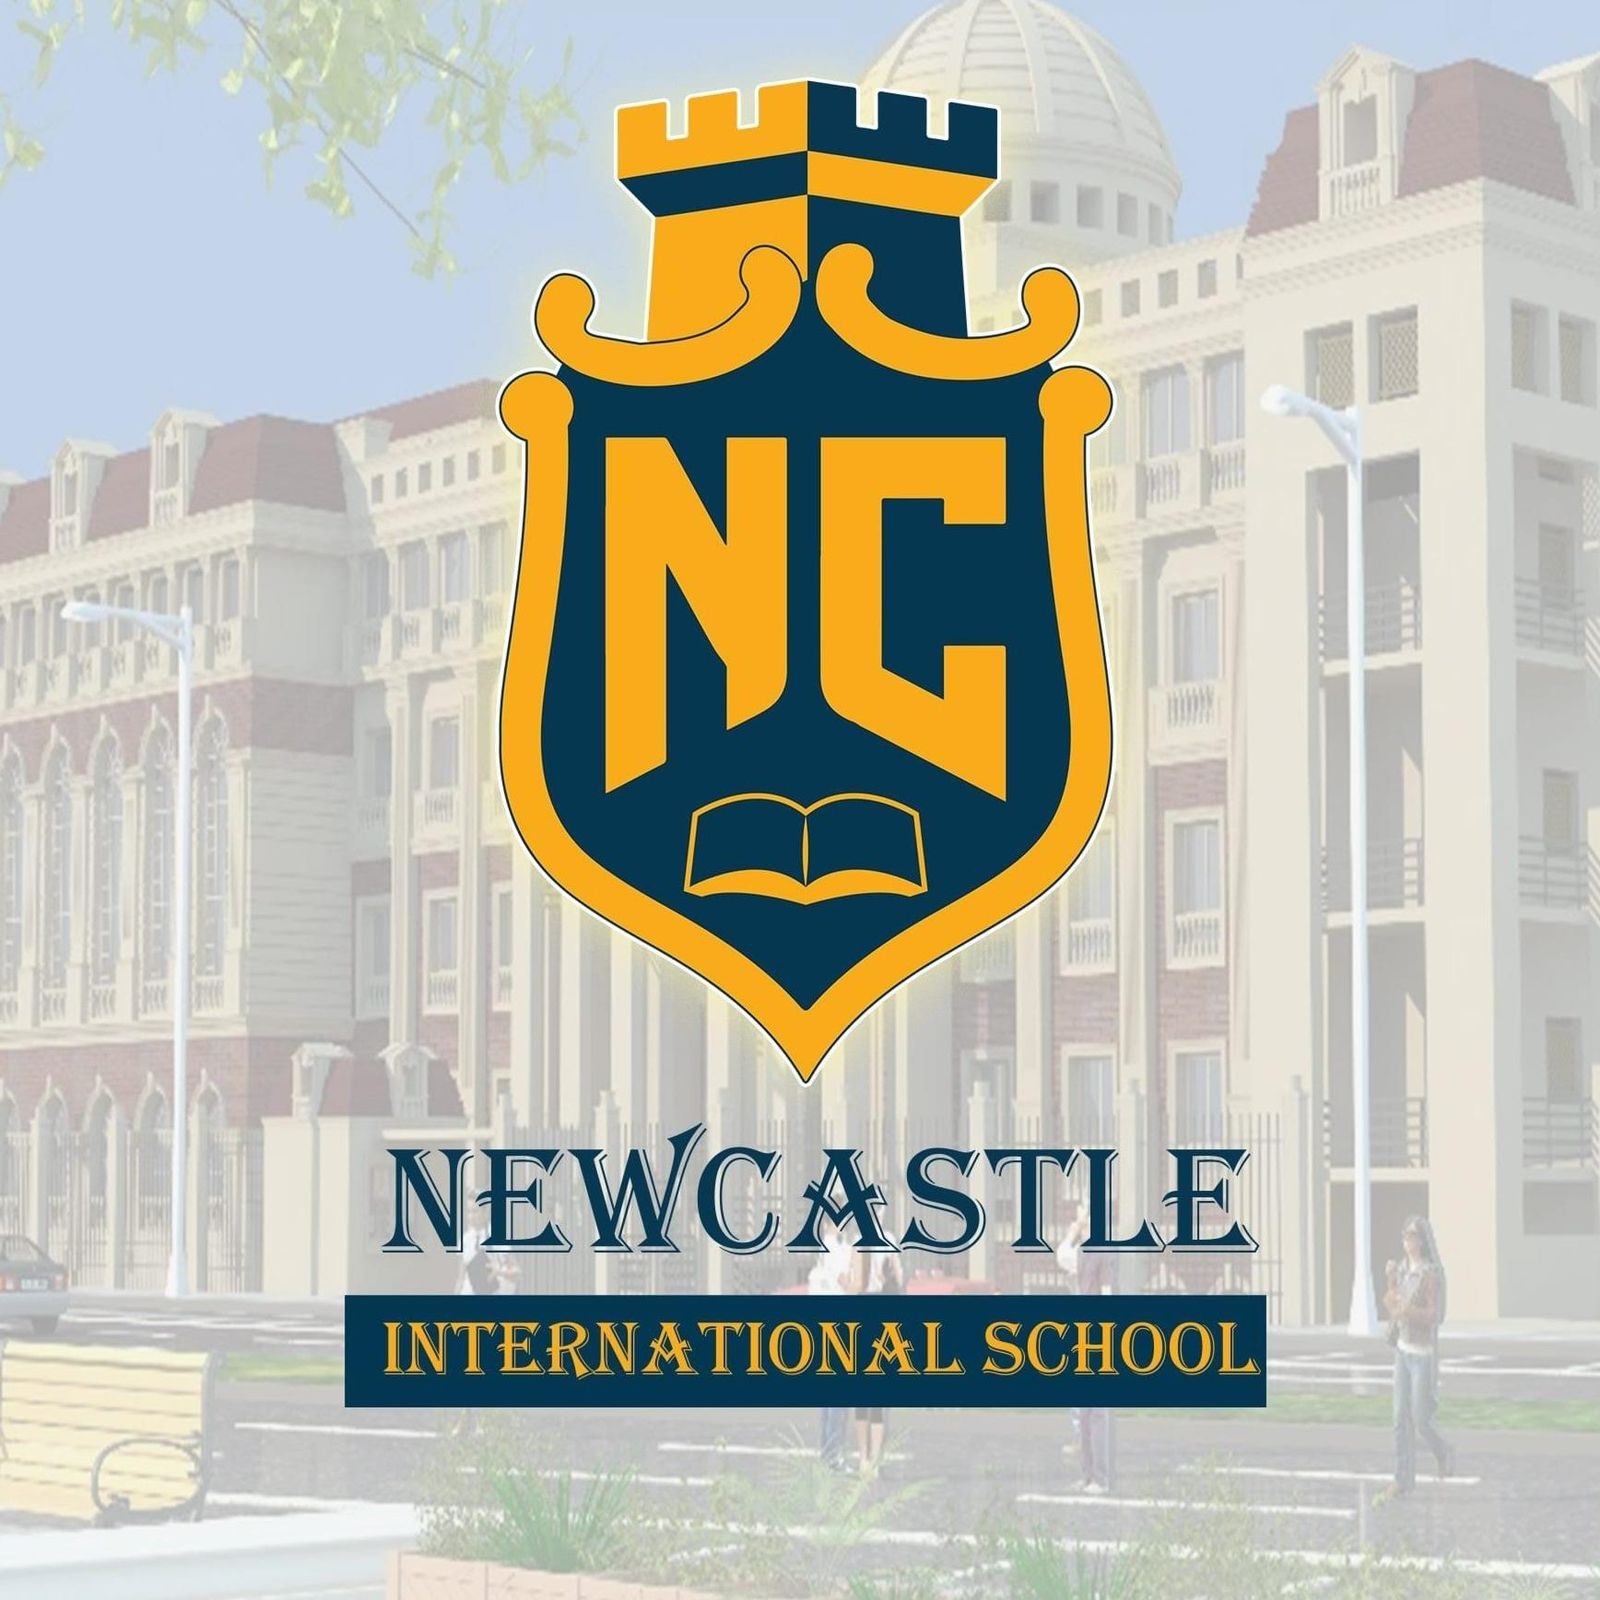 NewCastle International School